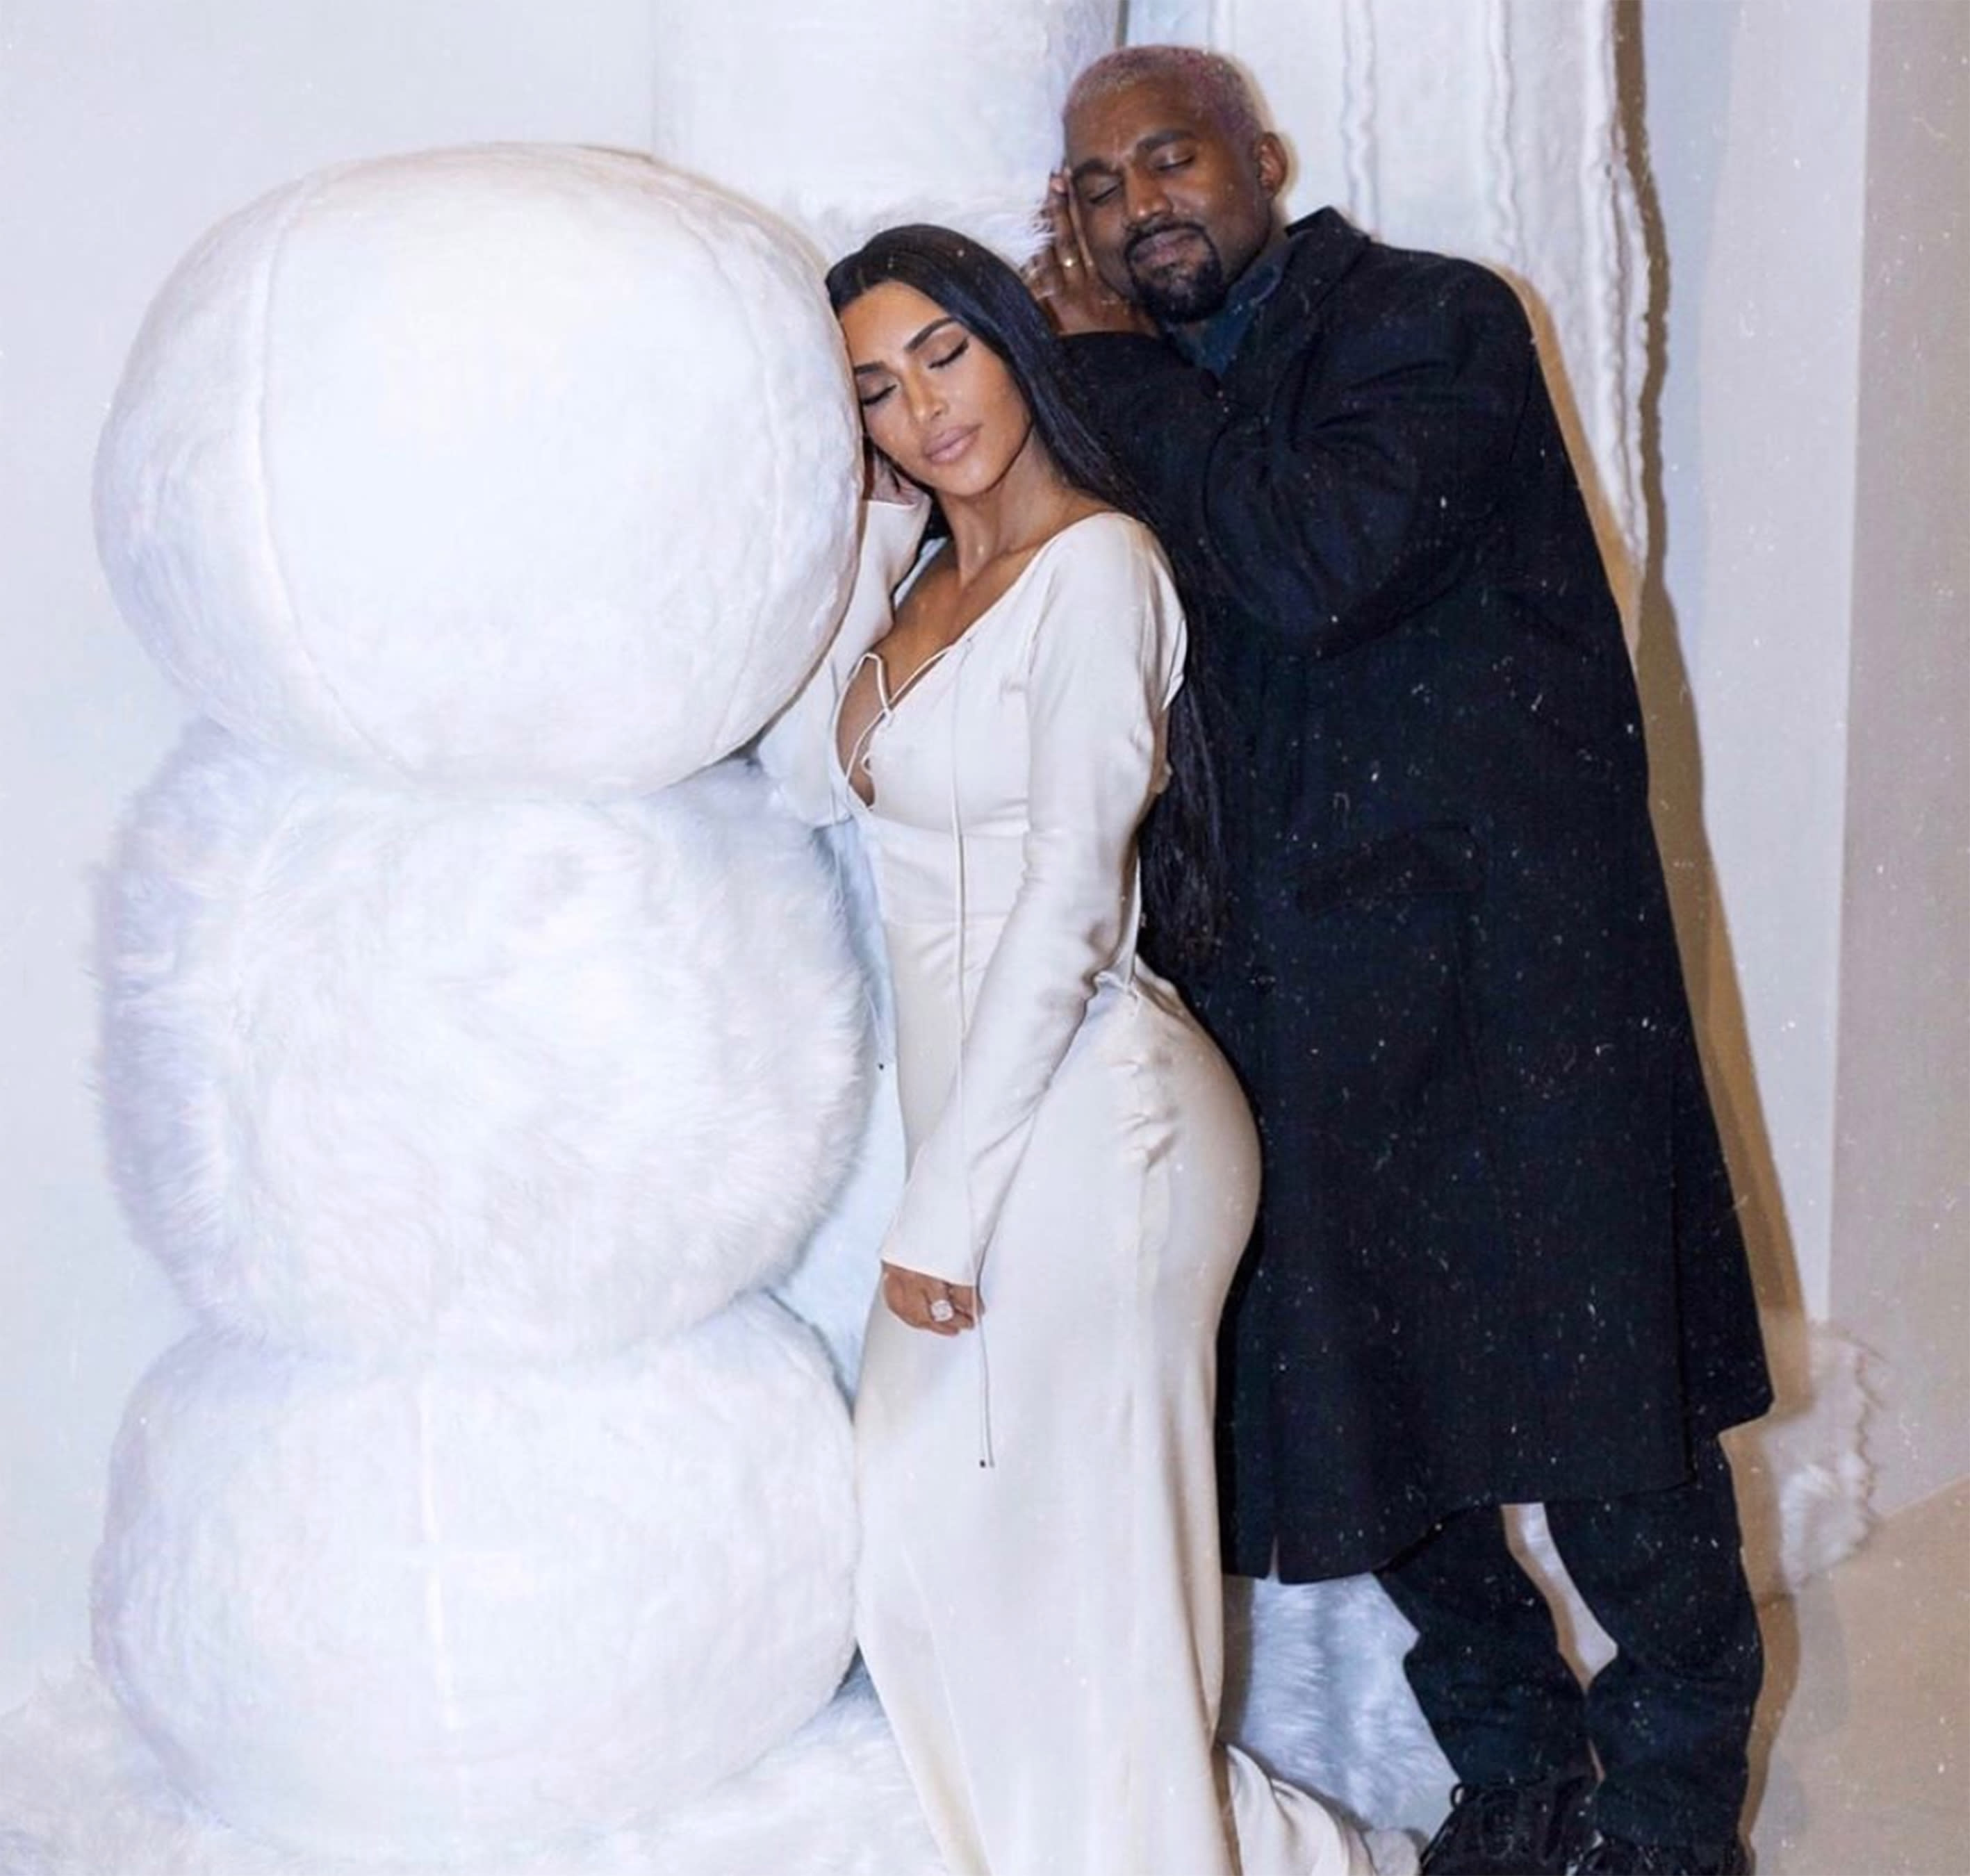 Kim Kardashian Had A Nip Slip At Christmas Eve Party That Left Kanye West Satisfied